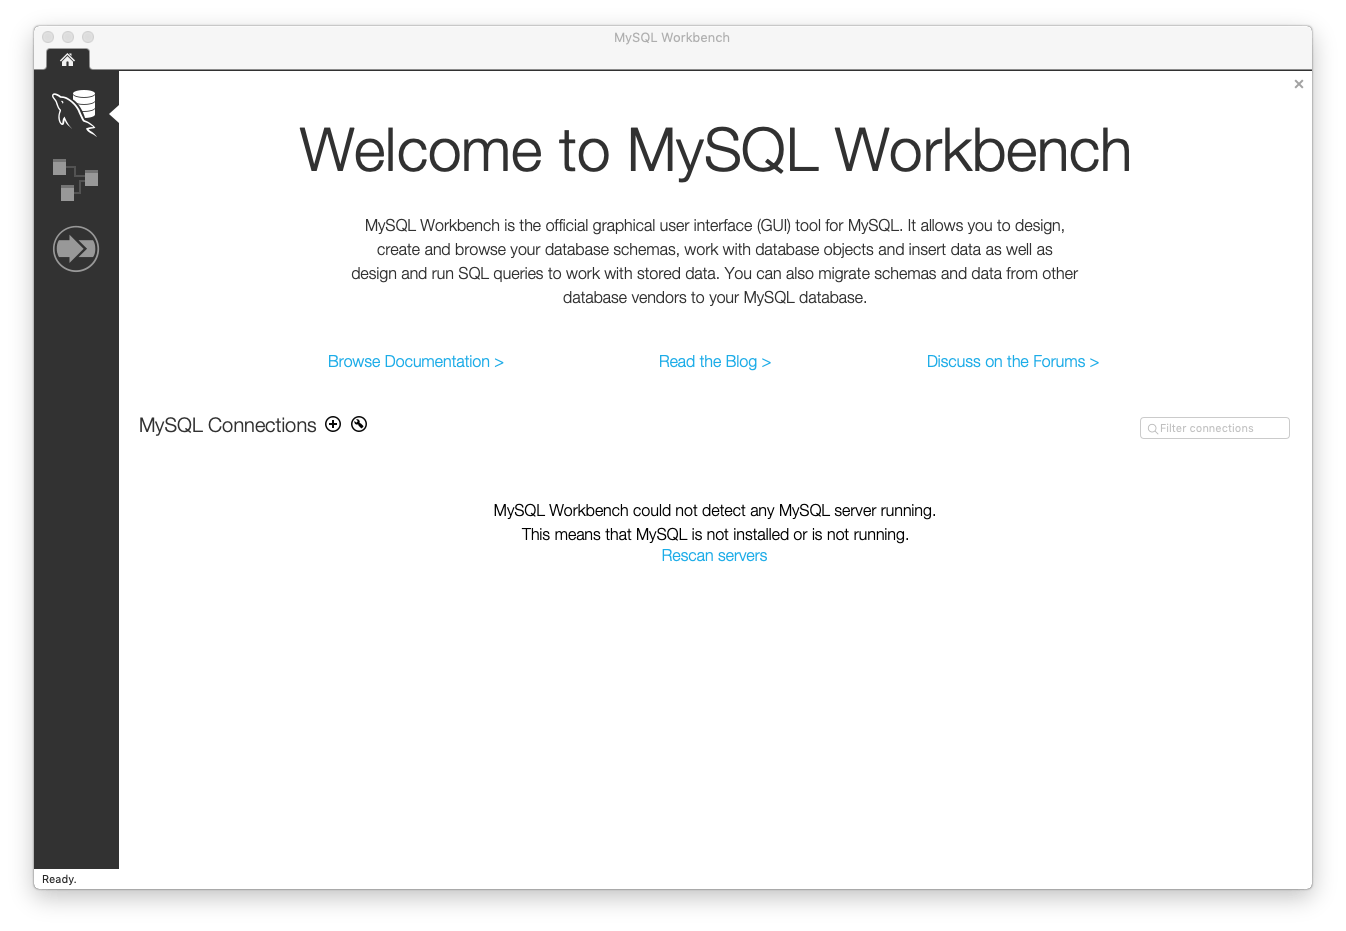 Mysql Download For Mac Mojave